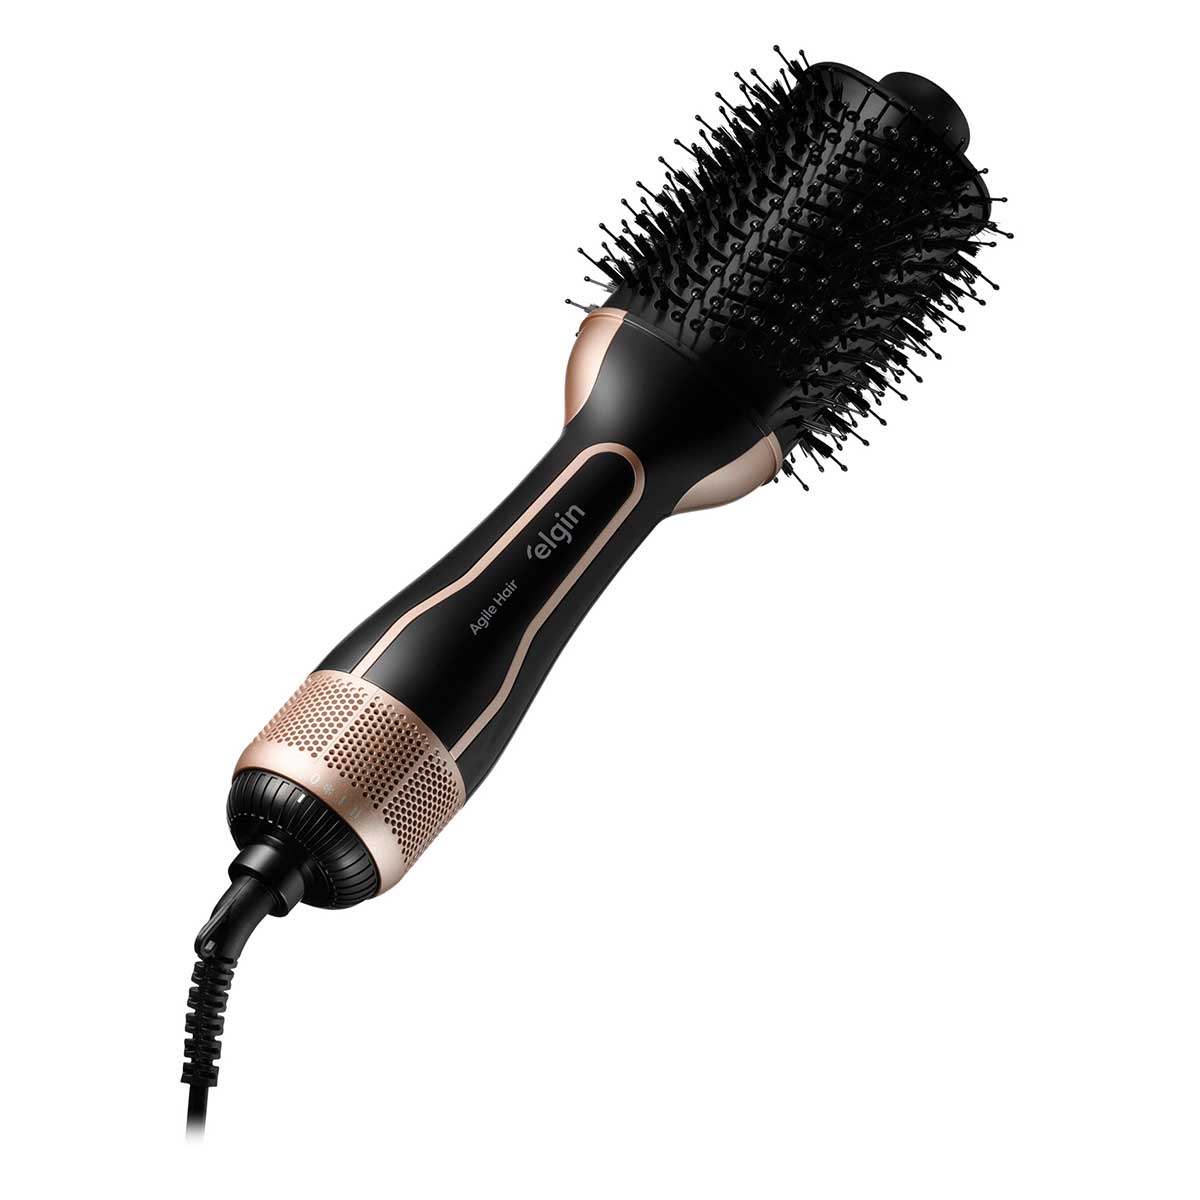 Escova Secadora Agile Hair 4 em 1 Bivolt Elgin: Seca, alisa, modela e da volume